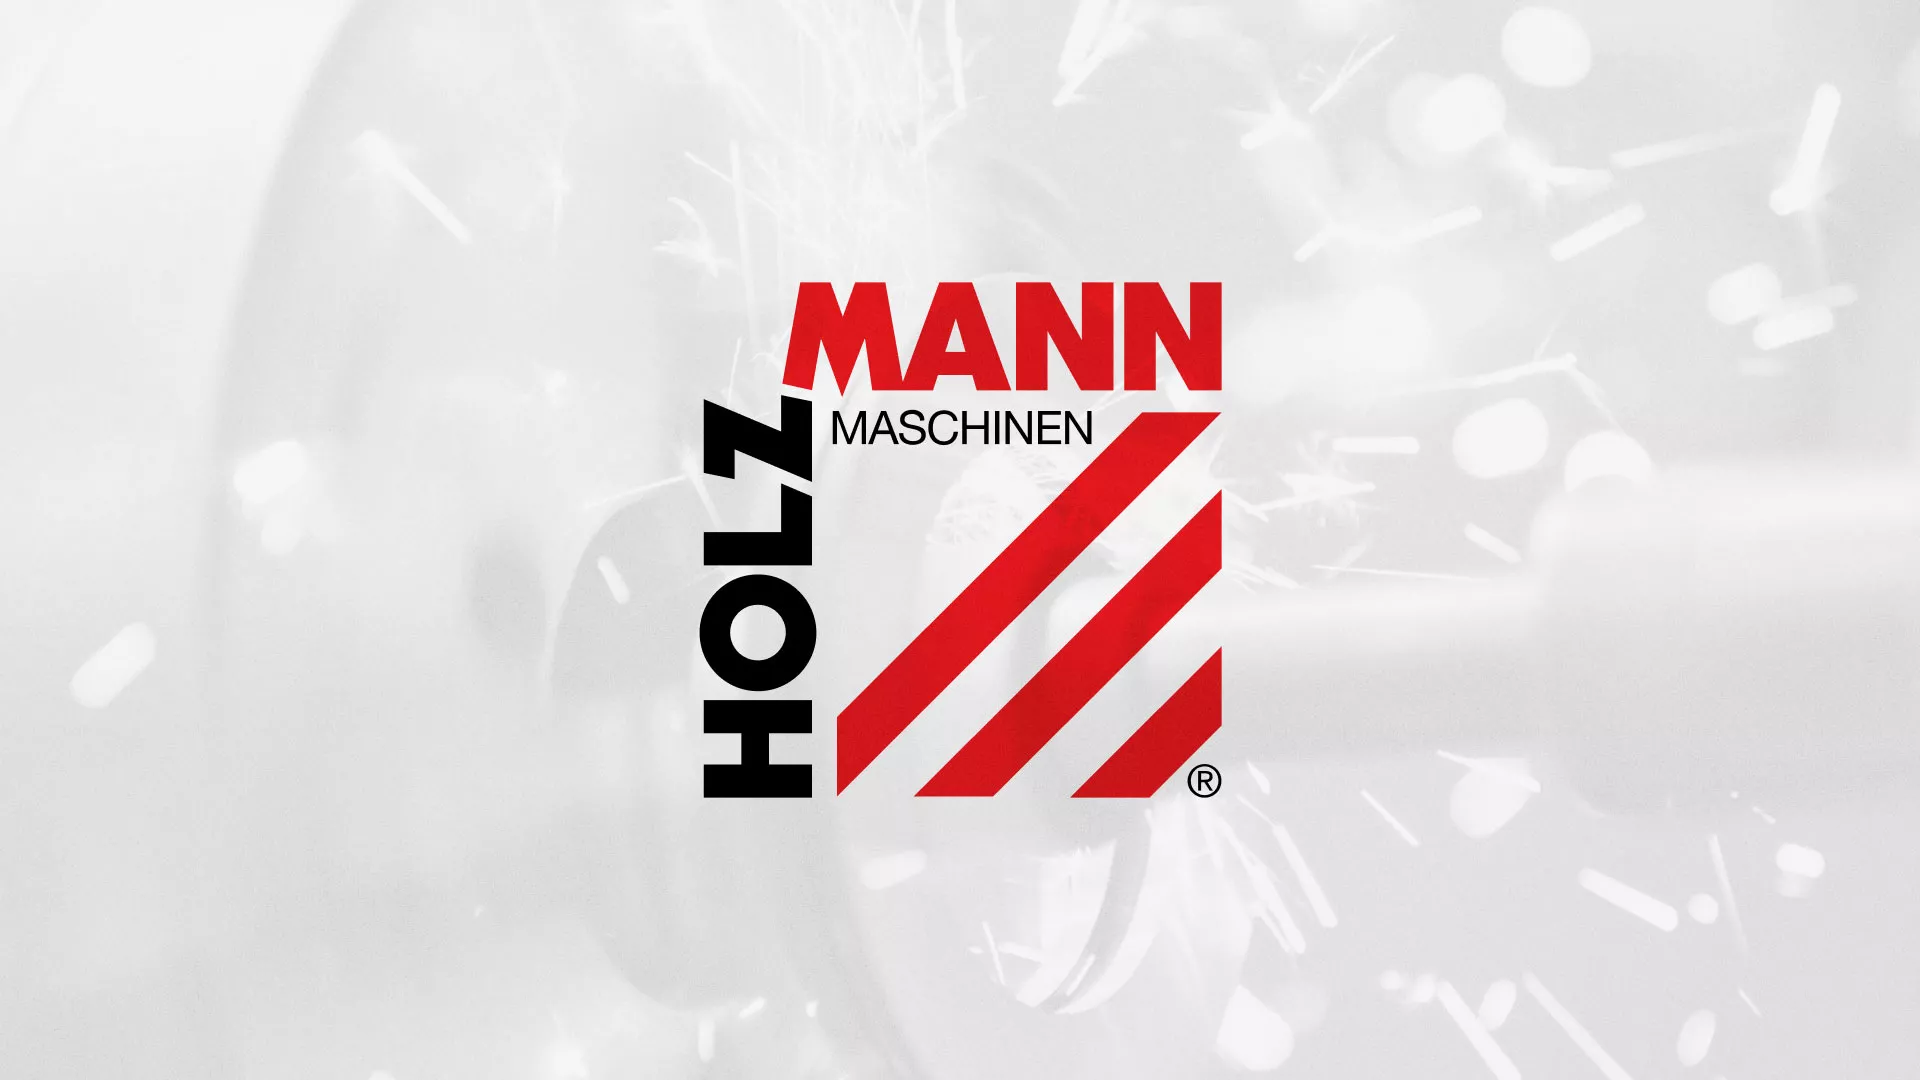 Создание сайта компании «HOLZMANN Maschinen GmbH» в Конаково